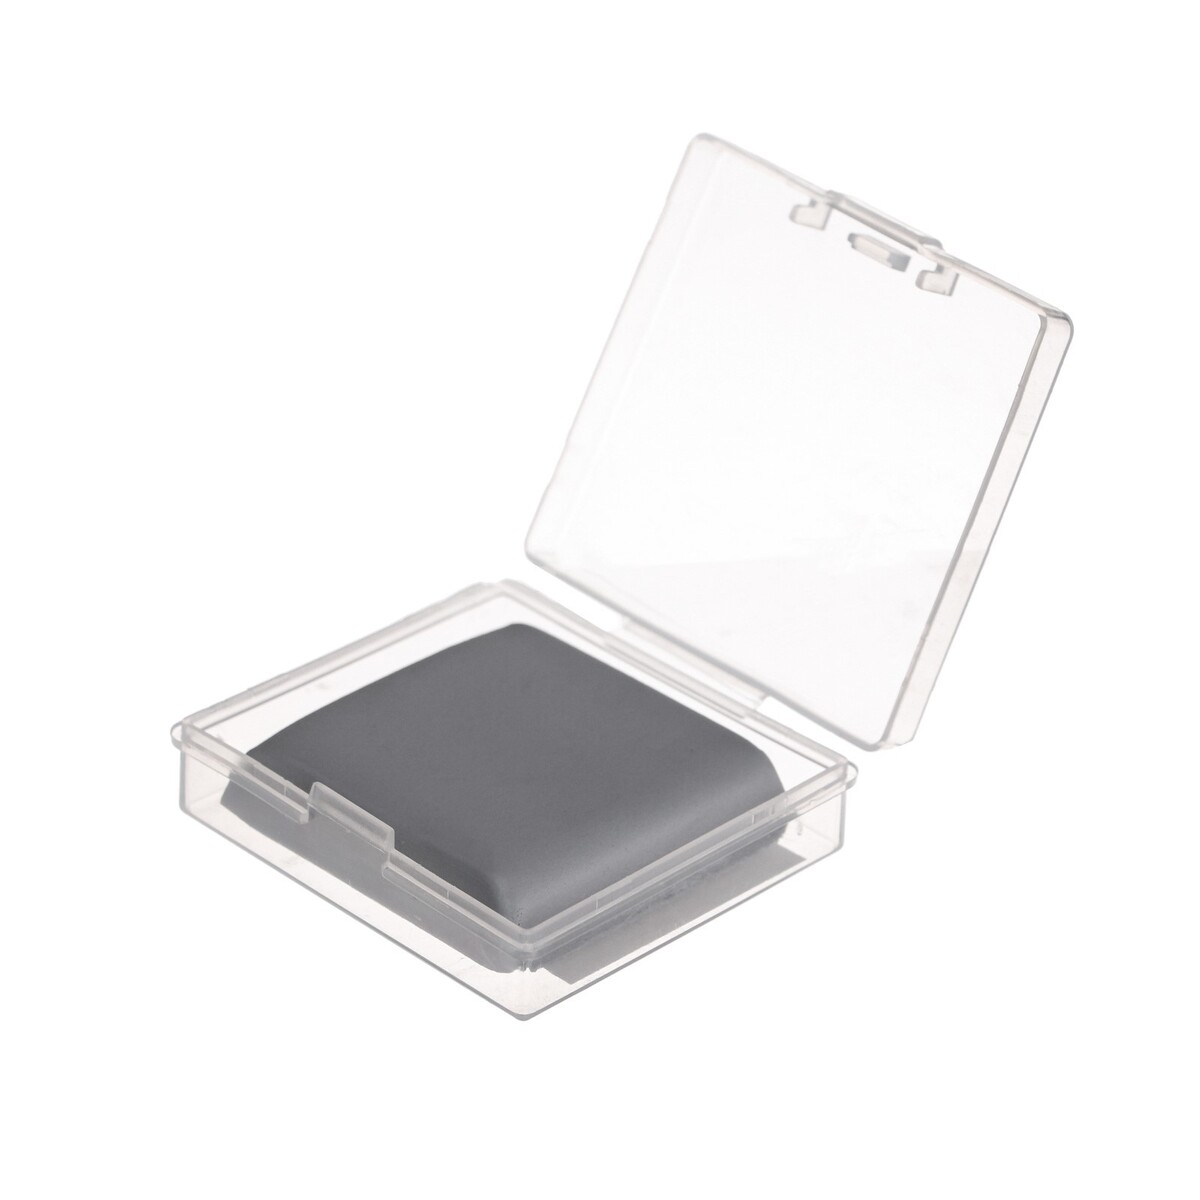 Ластик клячка прямоугольный серый, размер 37 х 35 х 0,9 мм, в коробочке ластик blackjack 40 20 11мм прямоугольный карт держатель brauberg